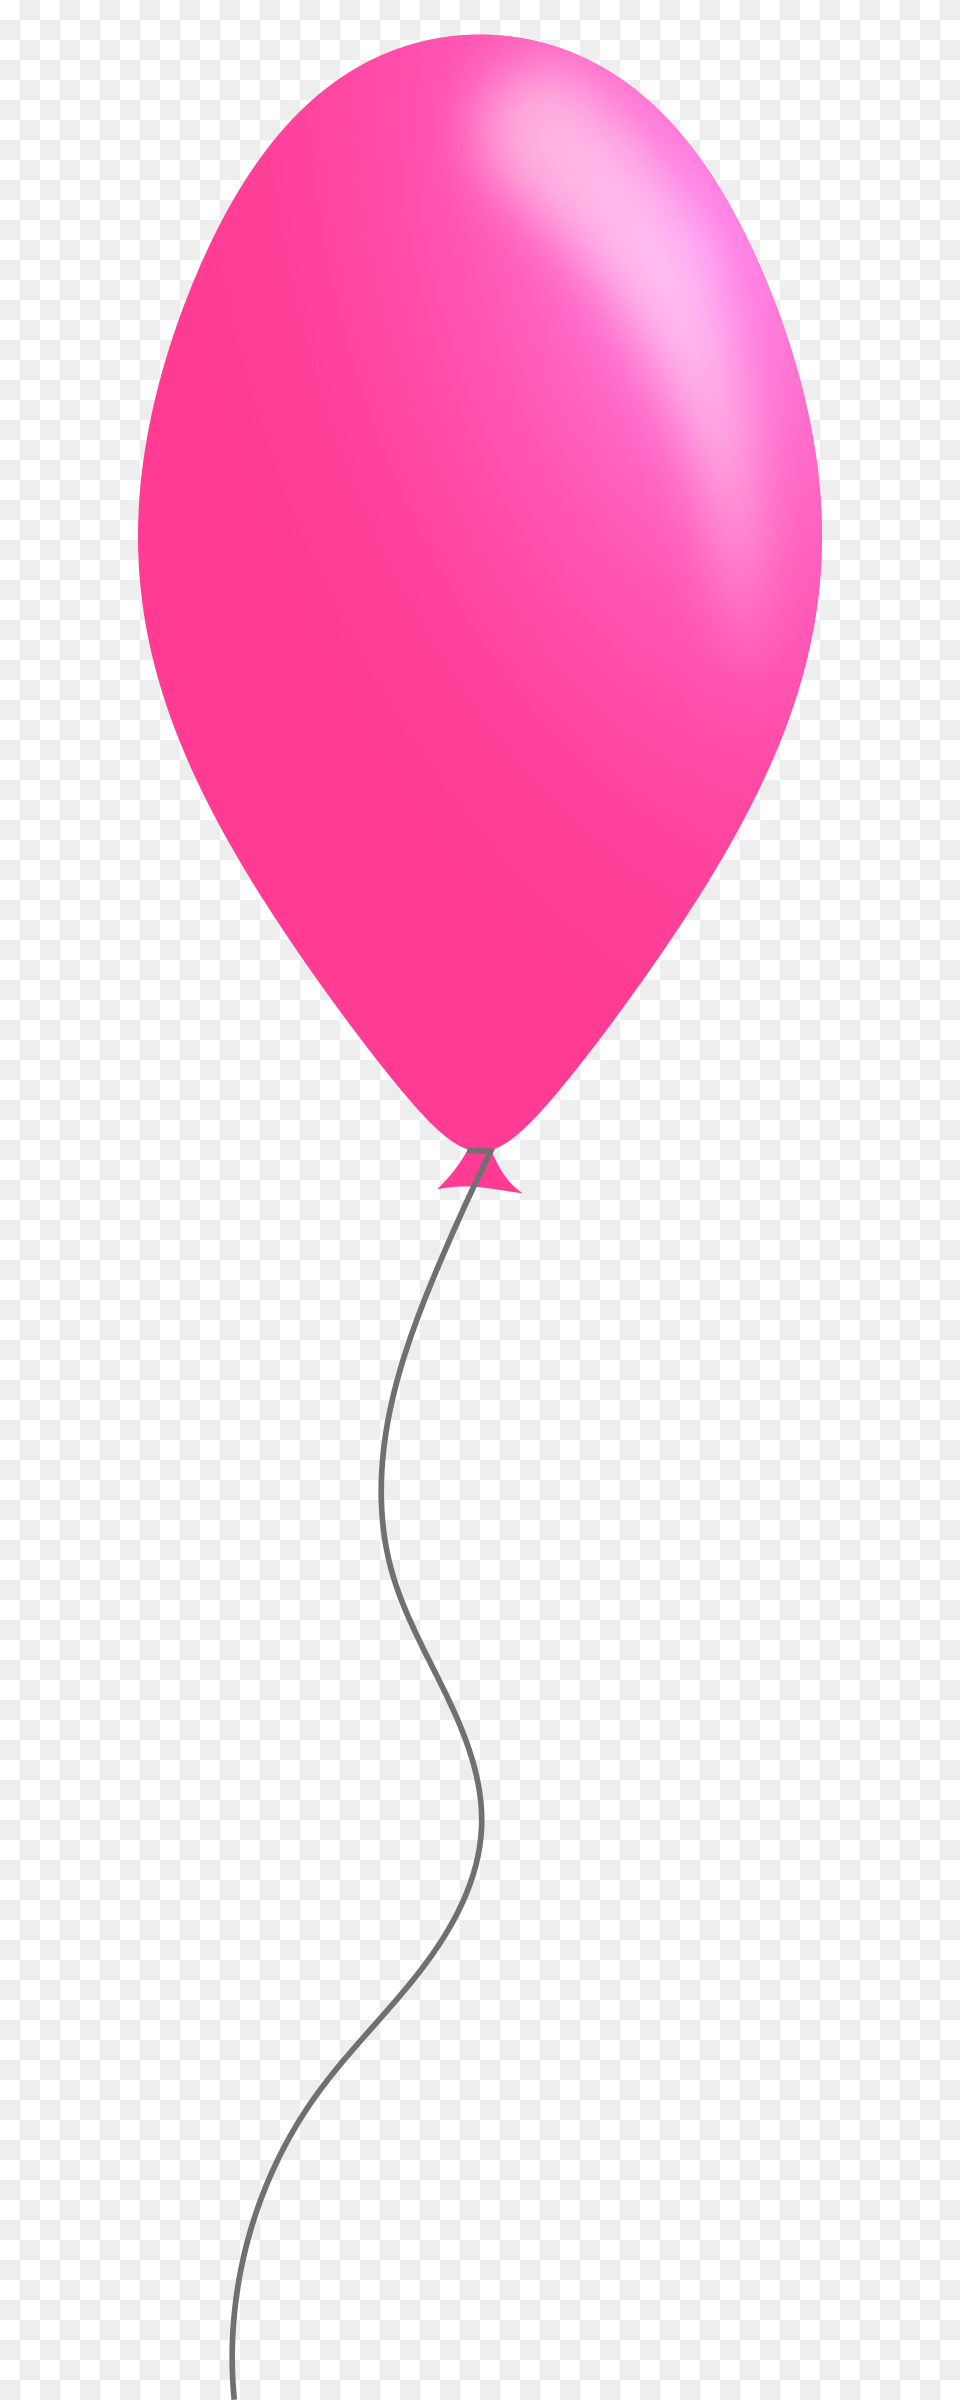 Big Image Balloon Pink Cartoon Free Transparent Png